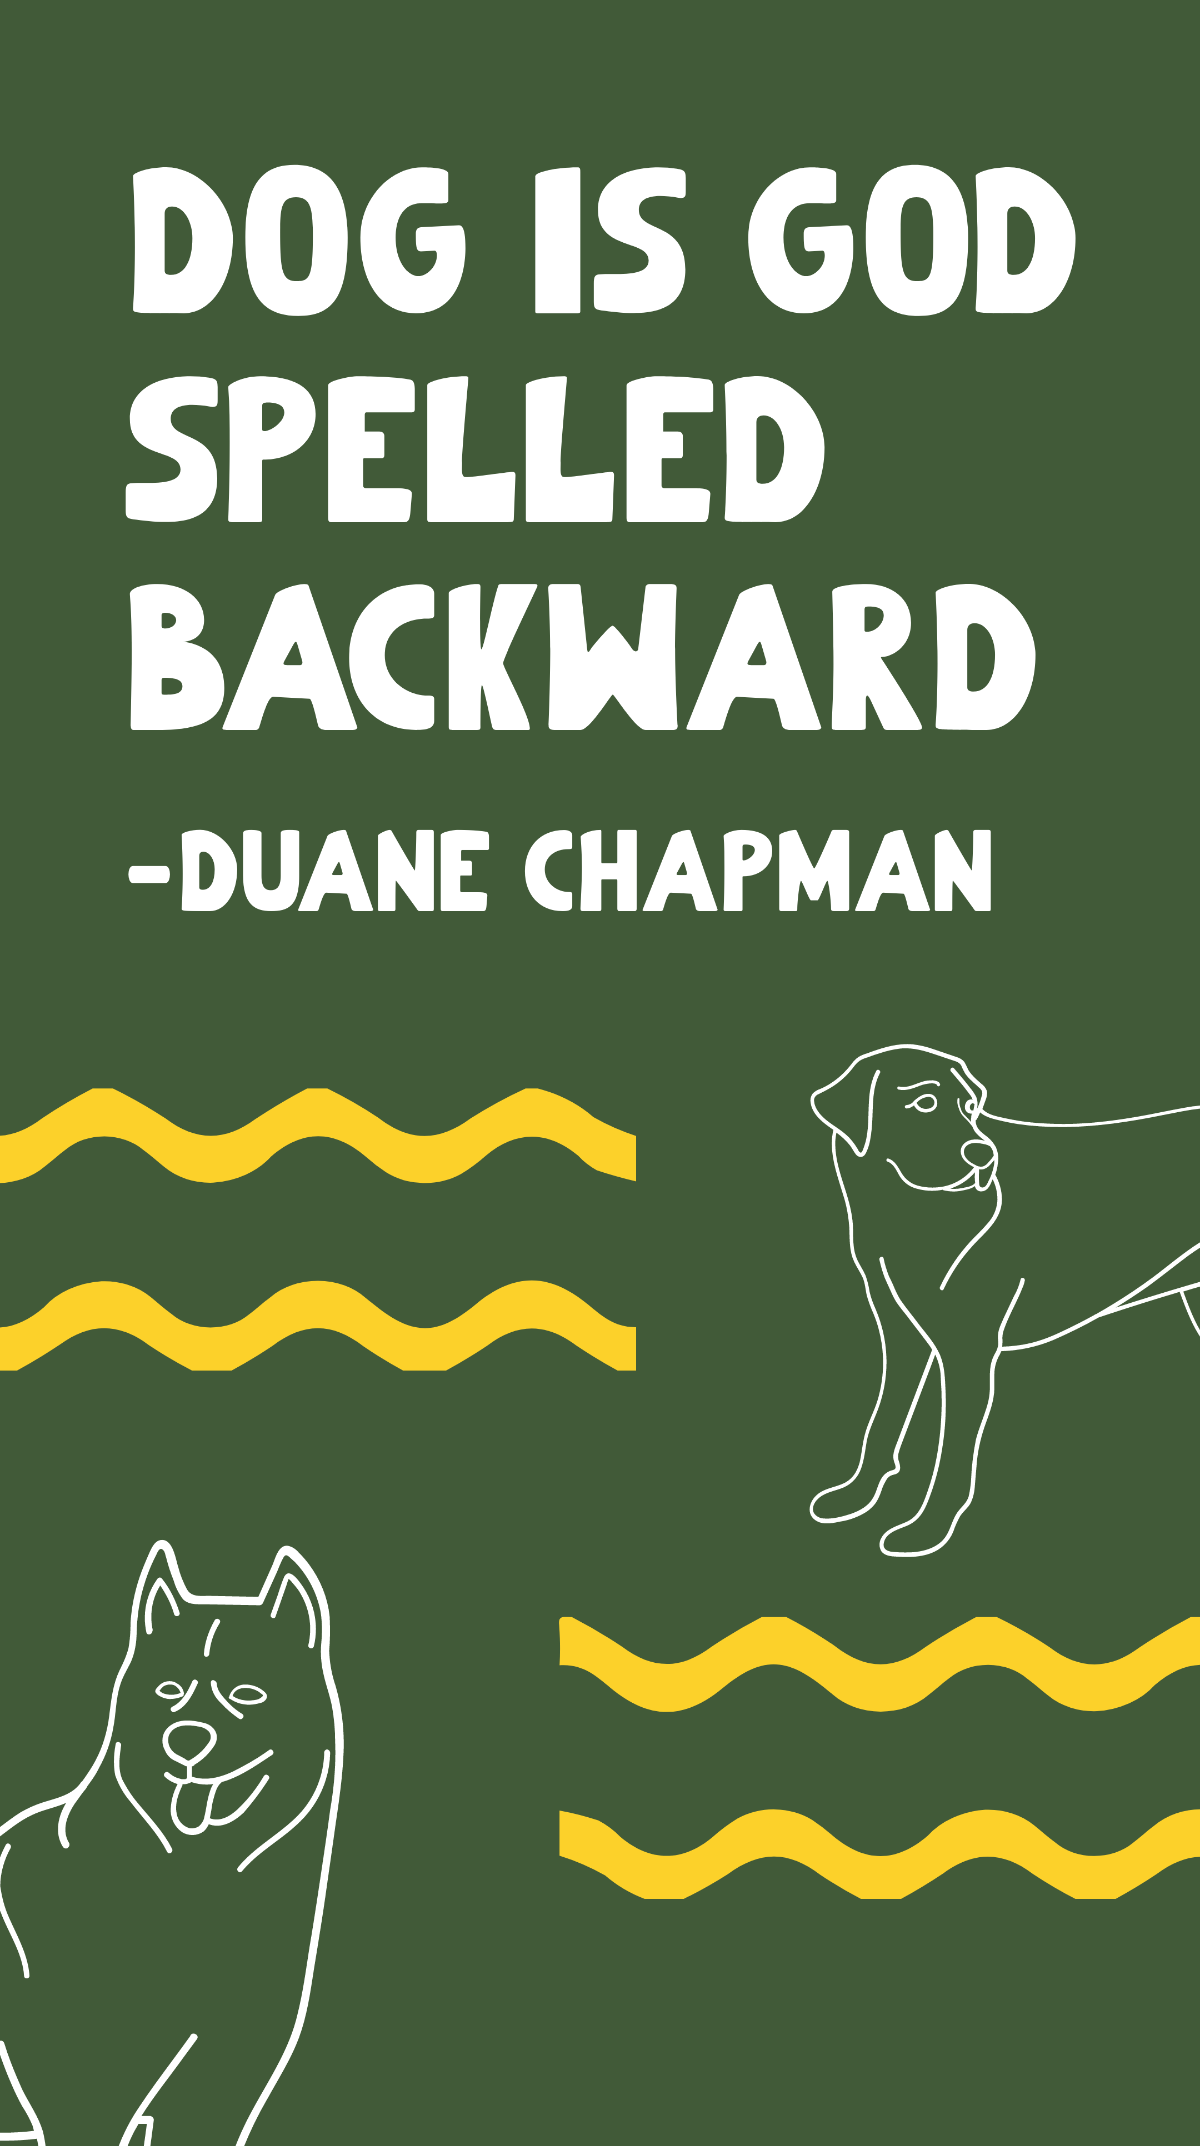 Duane Chapman - Dog is God spelled backward